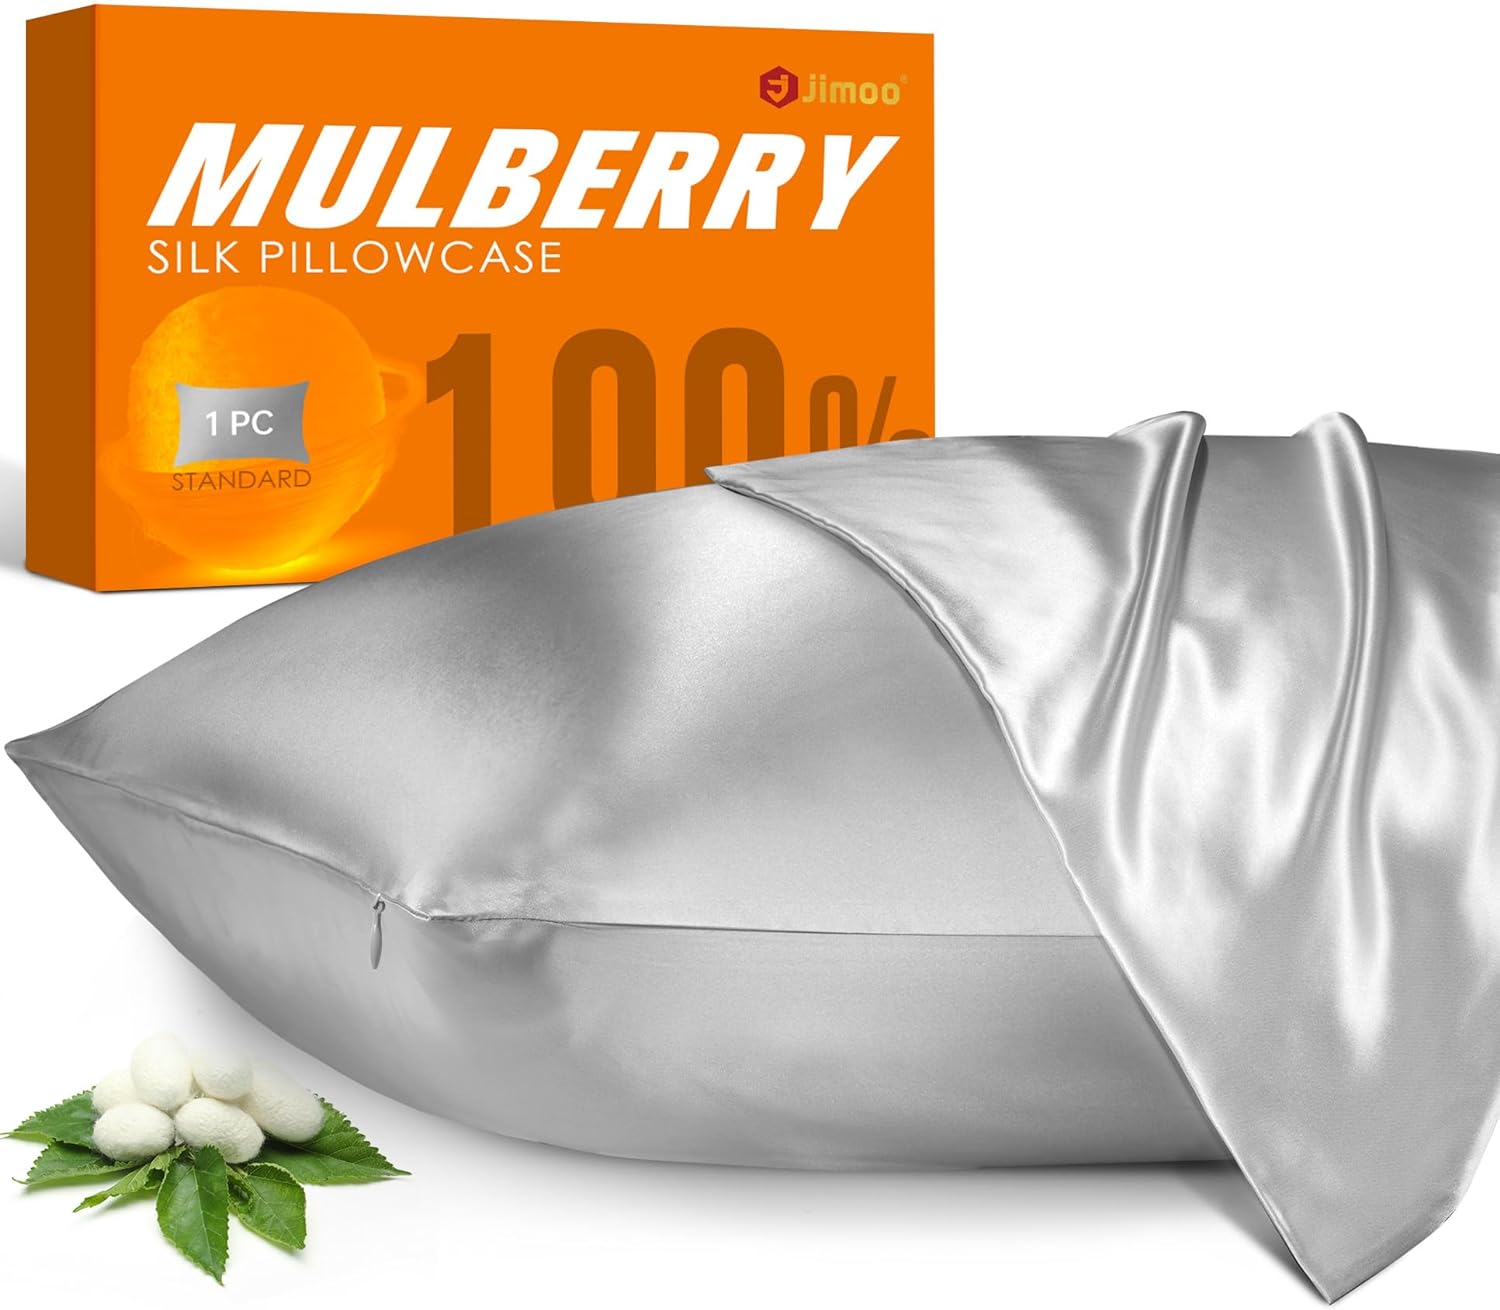 Mulberry Silk Pillowcase for Hair